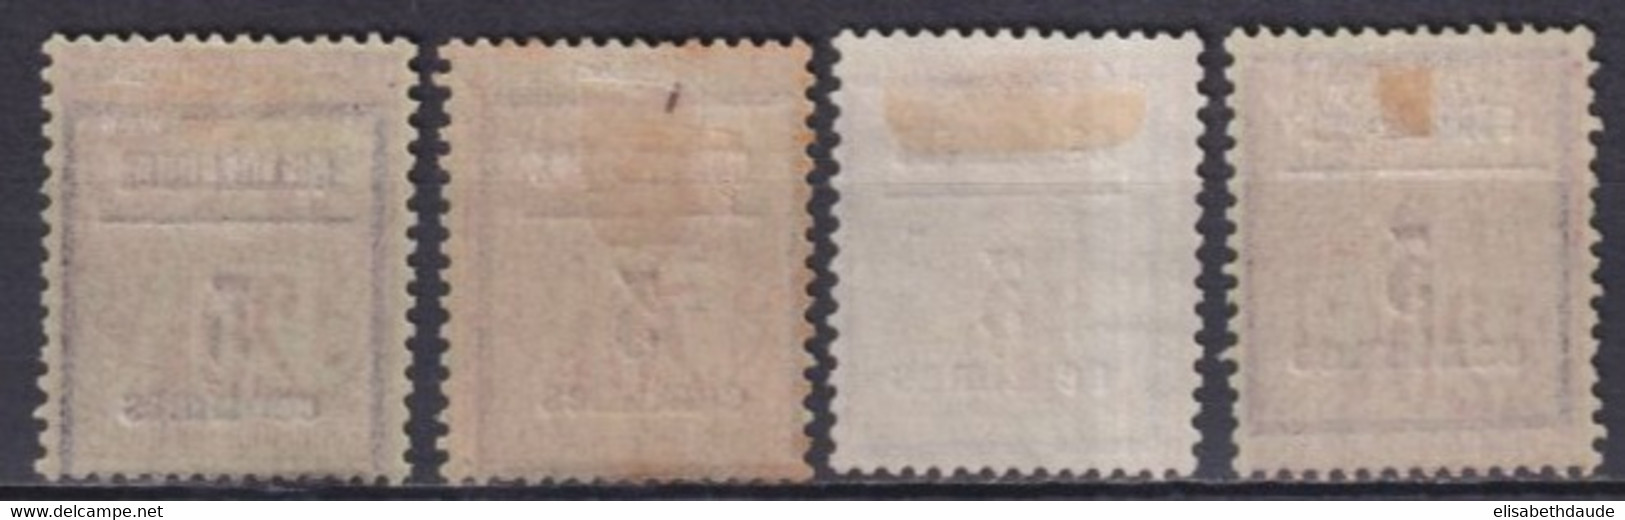 GUADELOUPE - 1889 - YVERT N° 3 TYPES I+II+III+V  * MH - COTE = 81 EUR. - - Unused Stamps